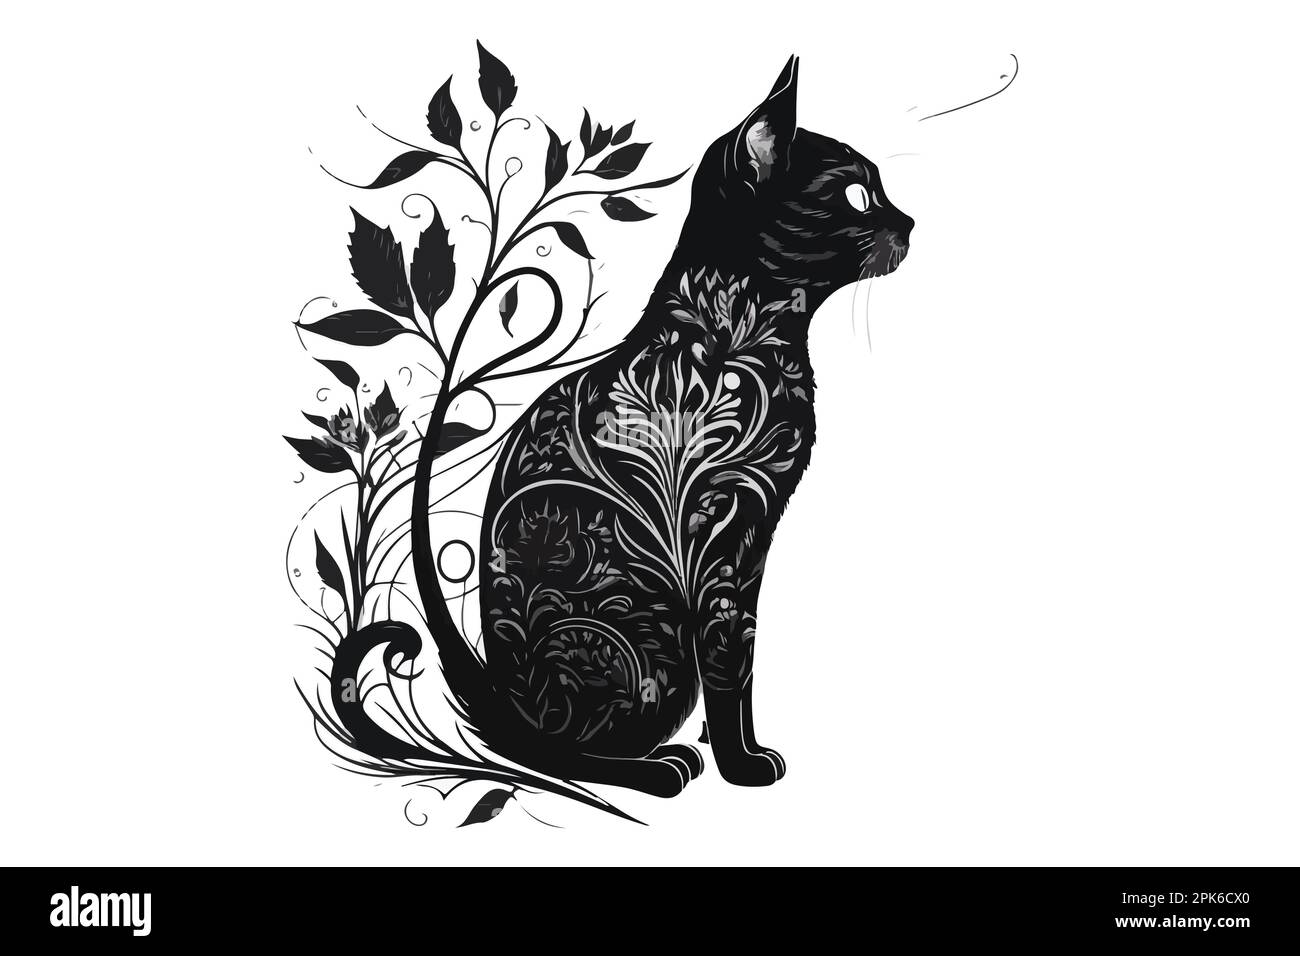 5. Yzma Cat Tattoo Black and White - wide 5